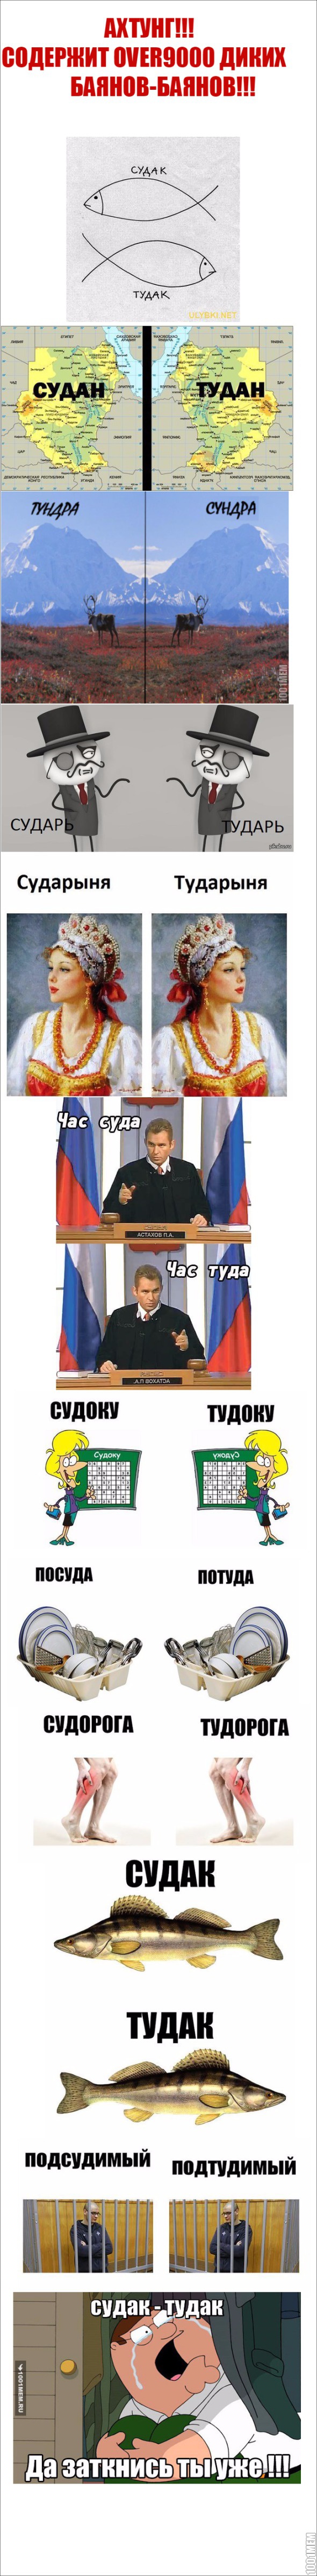 Сборник судаков тудаков. 1 издание.